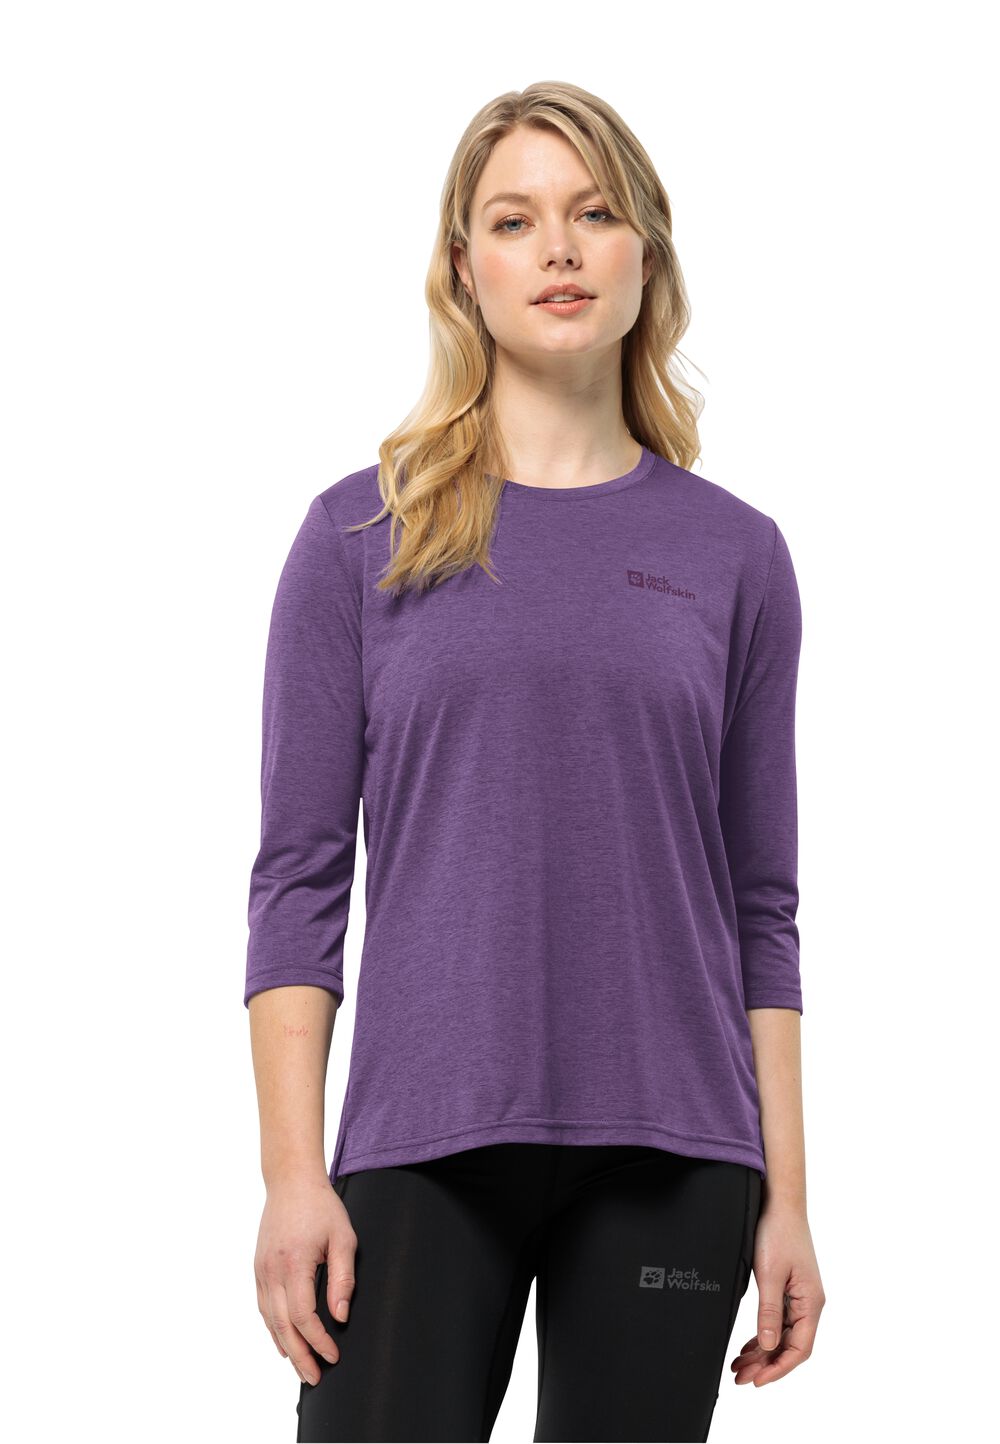 Jack Wolfskin Crosstrail 3 4 T-Shirt Women Functioneel shirt Dames L ultraviolet